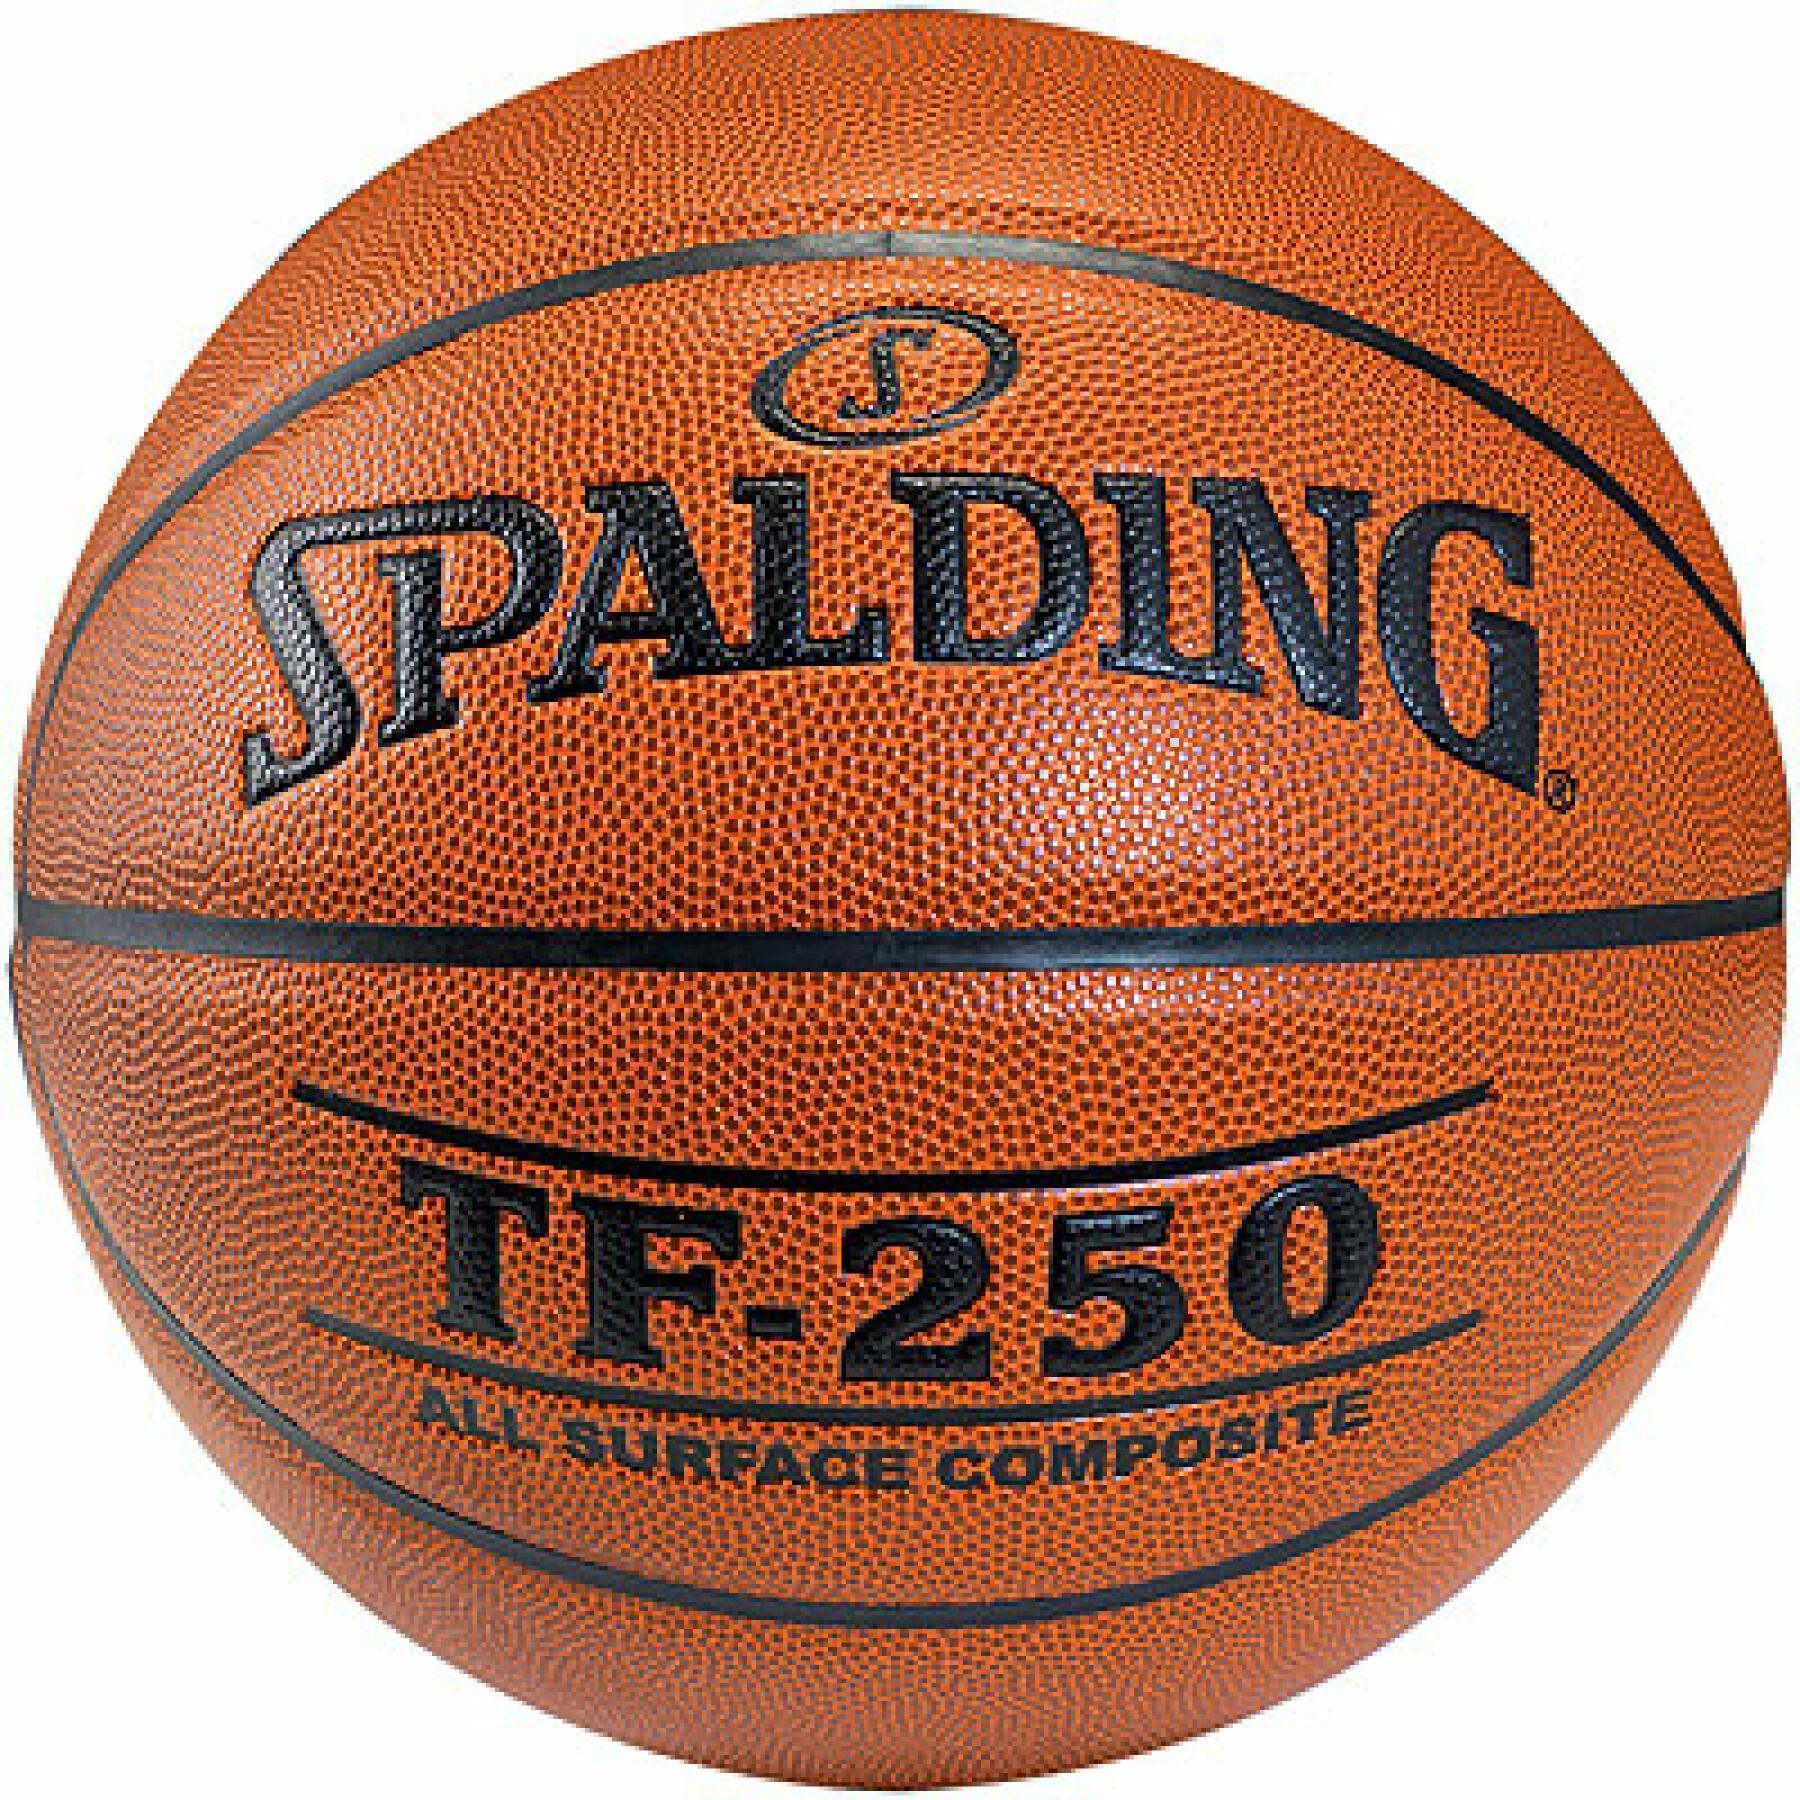 Basketball Spalding TF250 indoor/outdoor